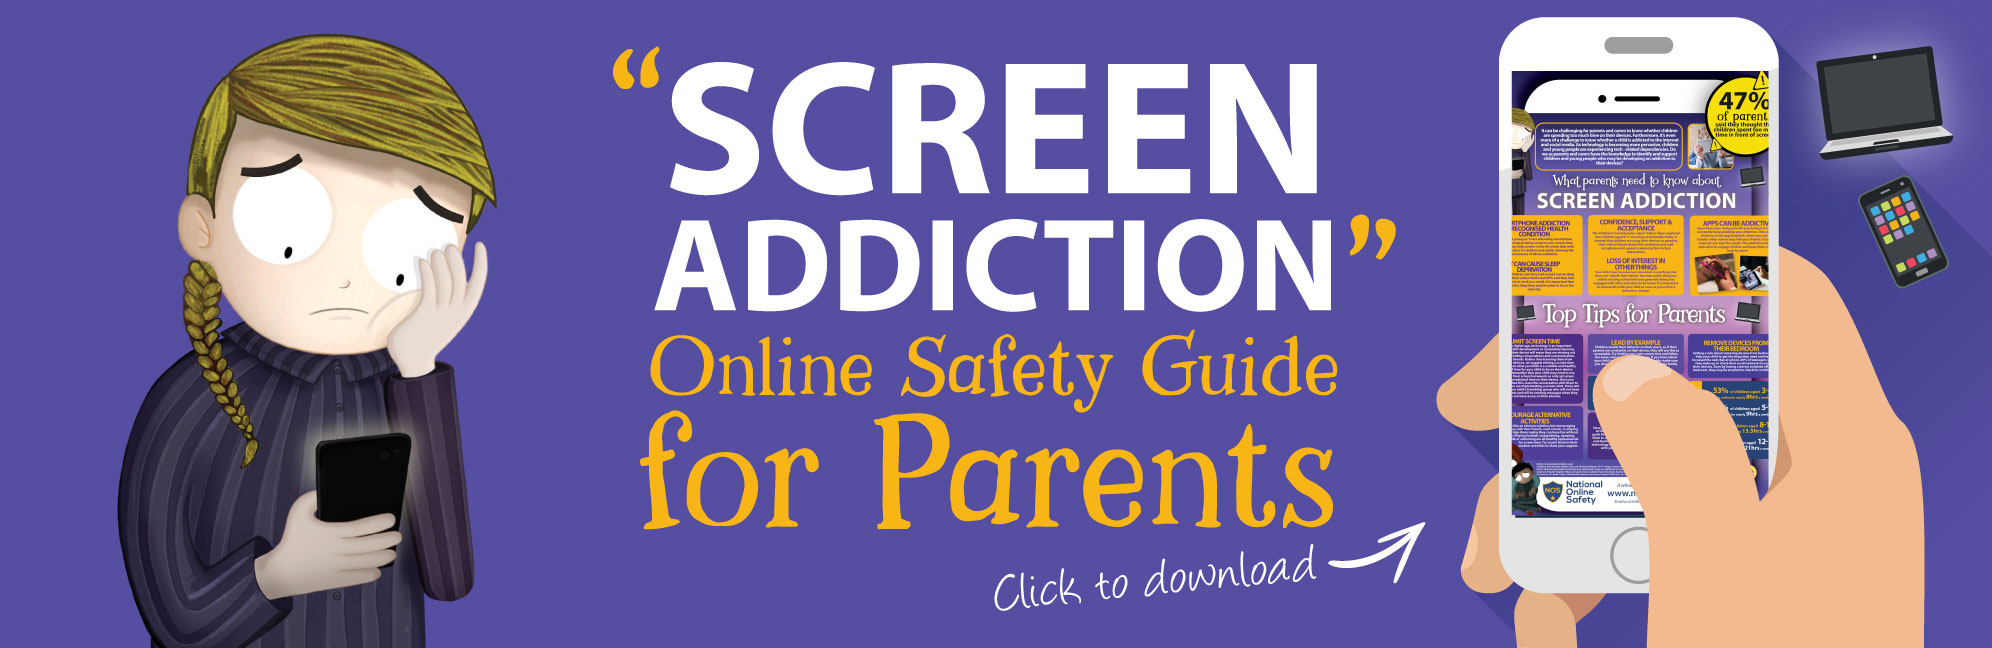 Screen-Addiction-Online-Safety-Parents-Guide-Web-Image-121118-V1